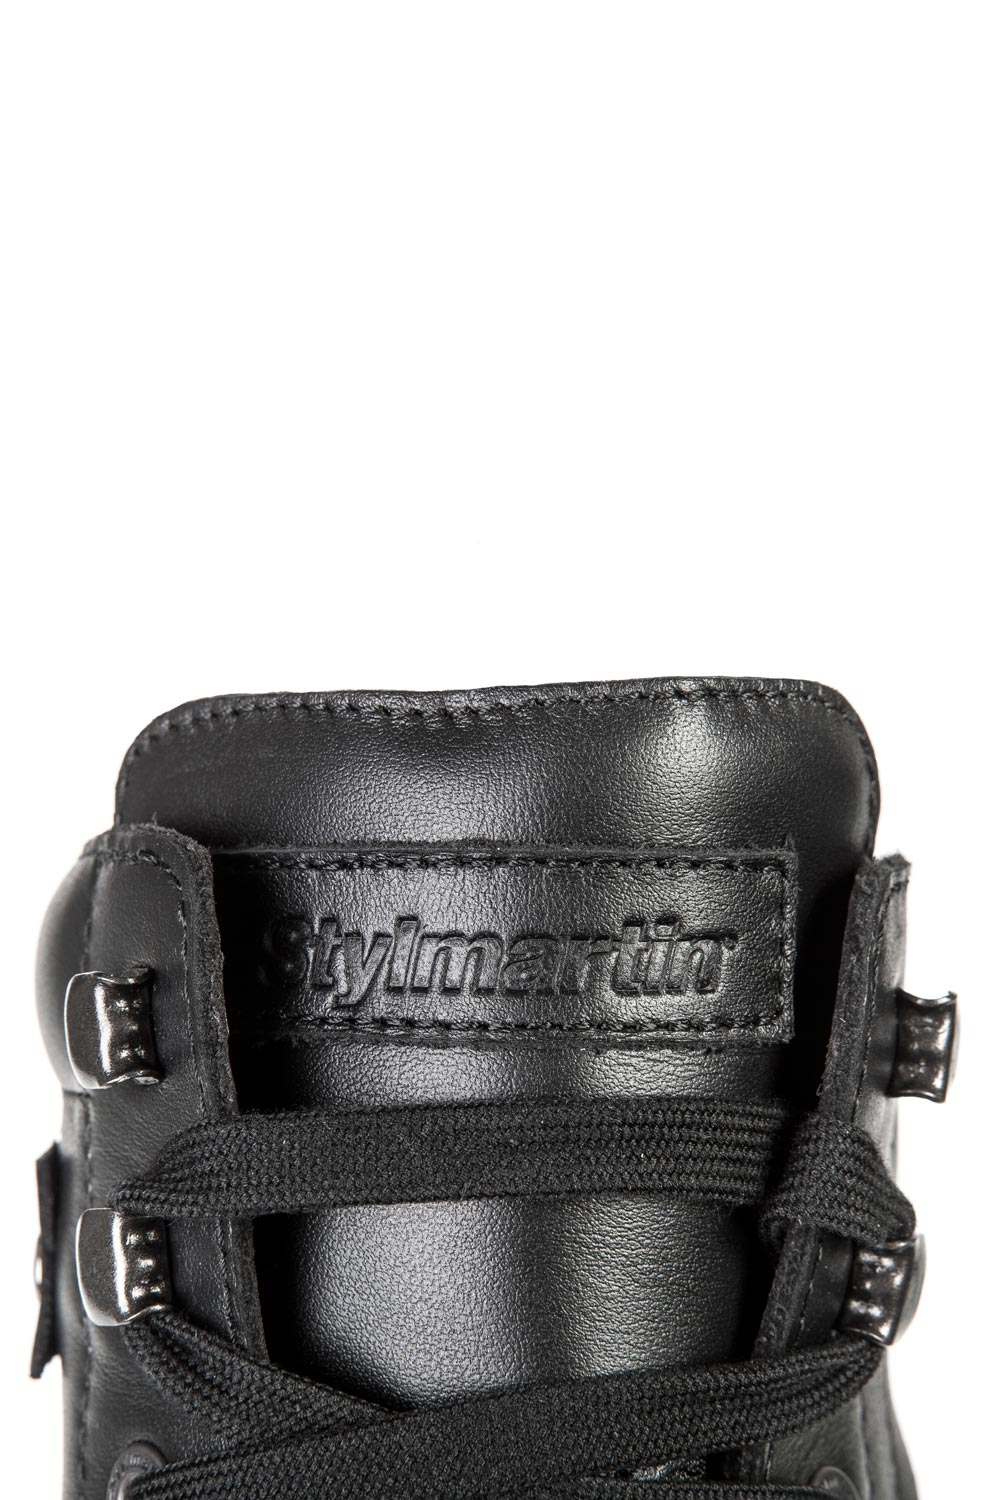 Jack Nero - Stylmartin waterproof motorcycle boots emblem